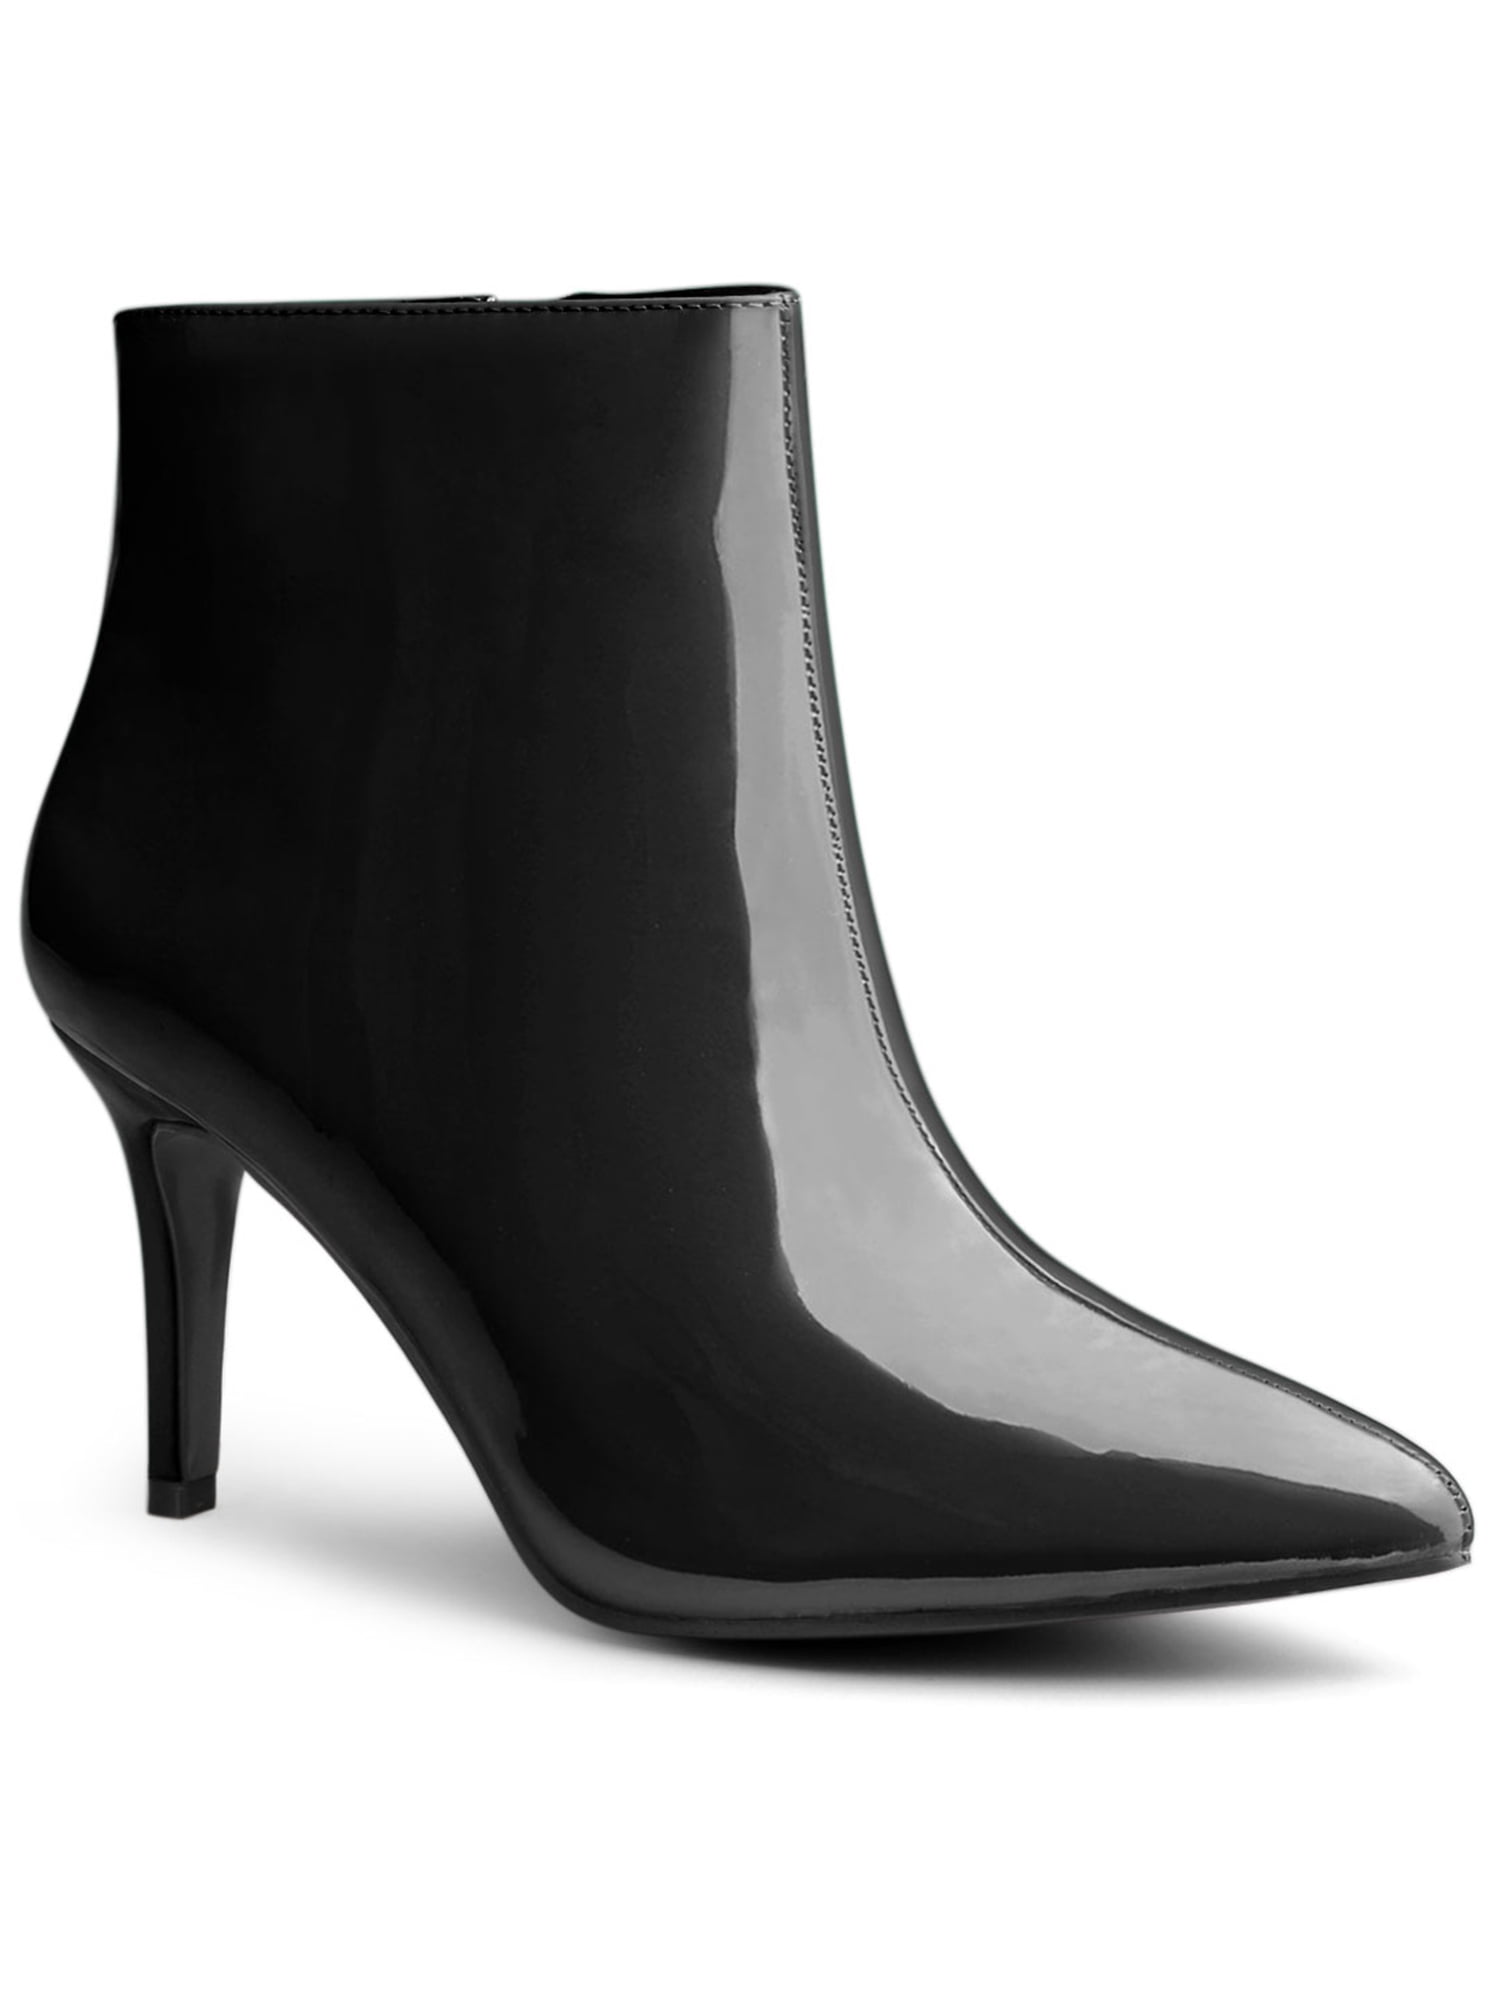 Allegra K Women's Pointed Toe Stiletto High Heels Ankle Boots Black 9.5 ...